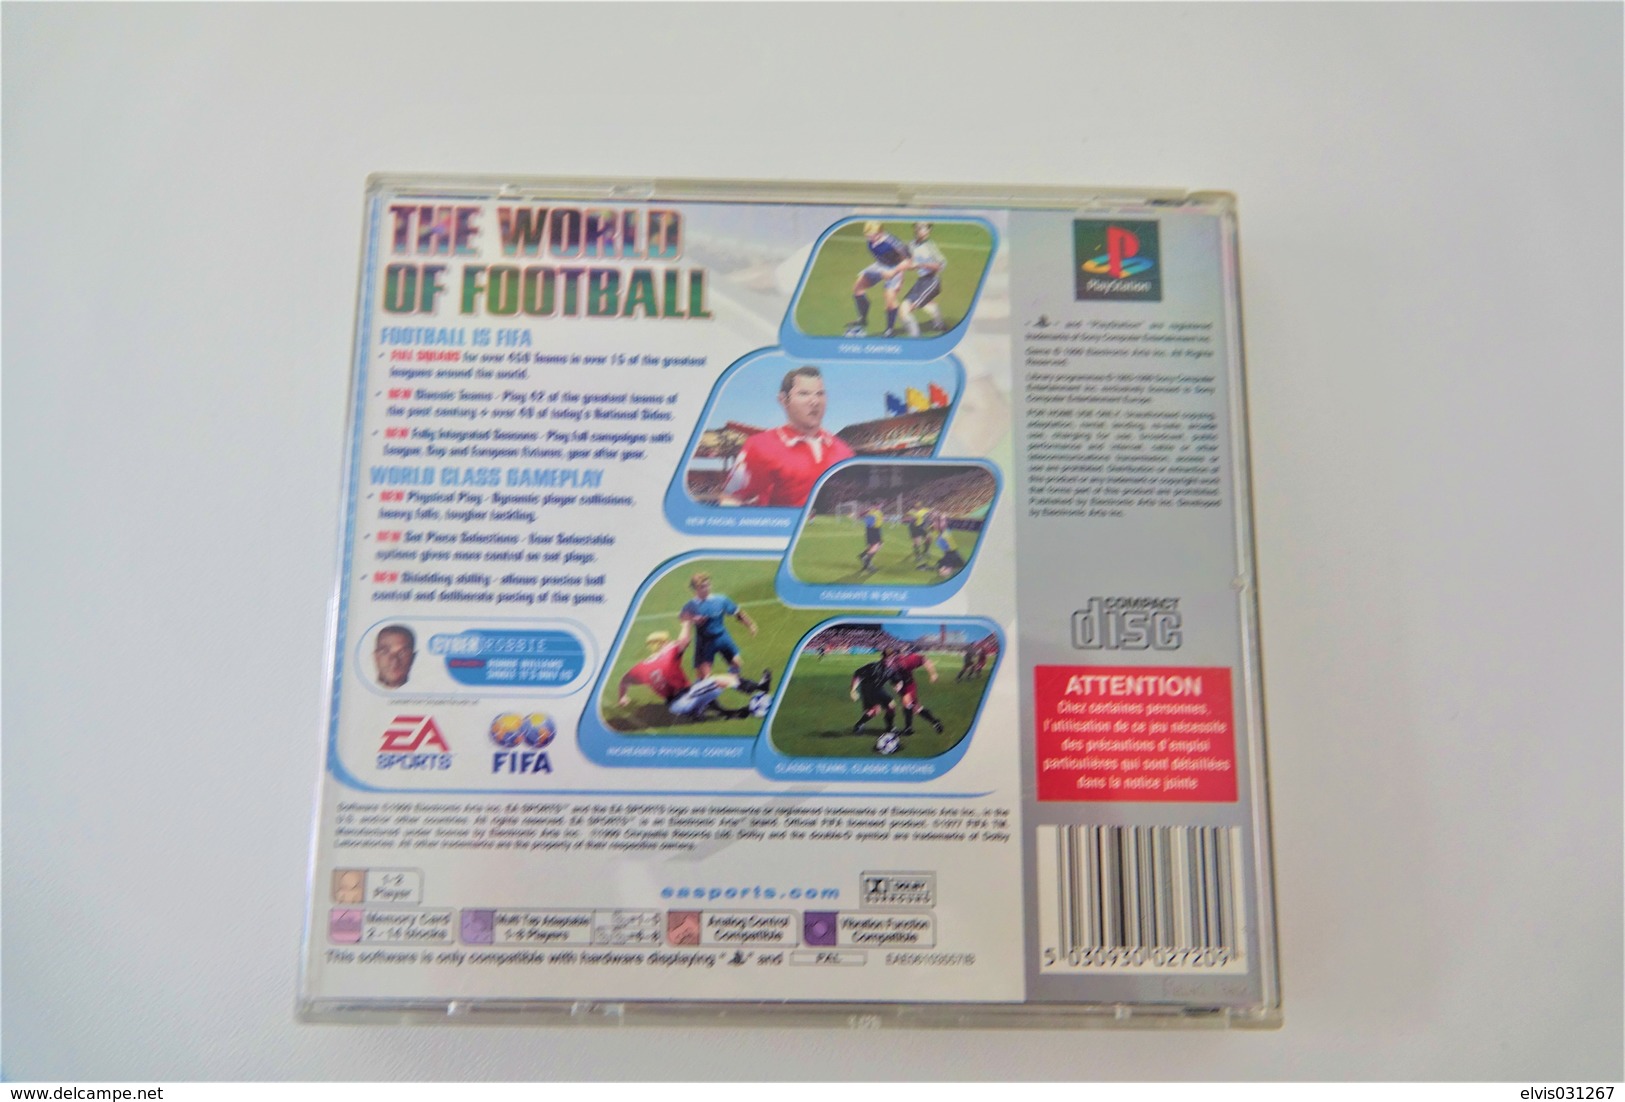 SONY PLAYSTATION ONE PS1 : EA FIFA 2000 PLATINUM - Playstation